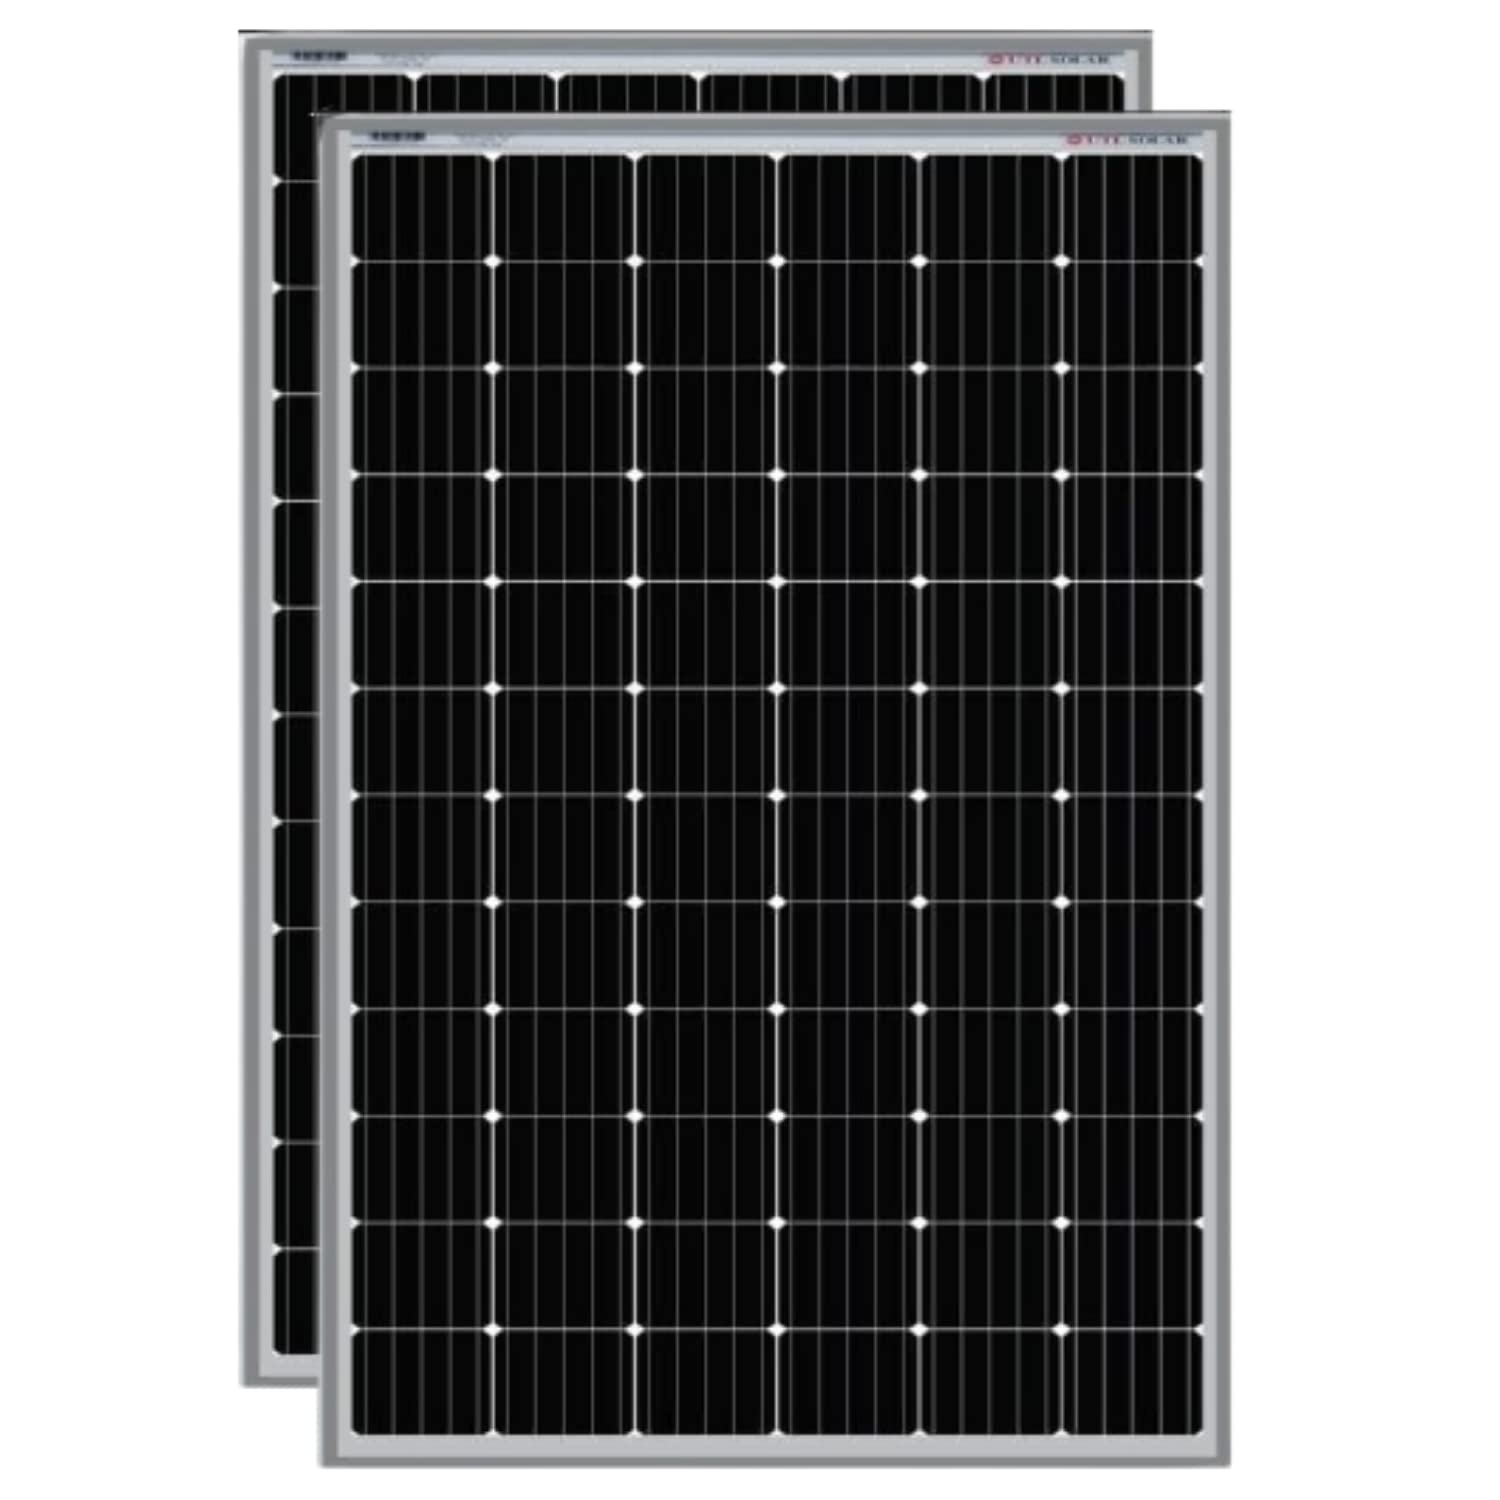 solar-panel-rebates-hot-sales-save-60-jlcatj-gob-mx